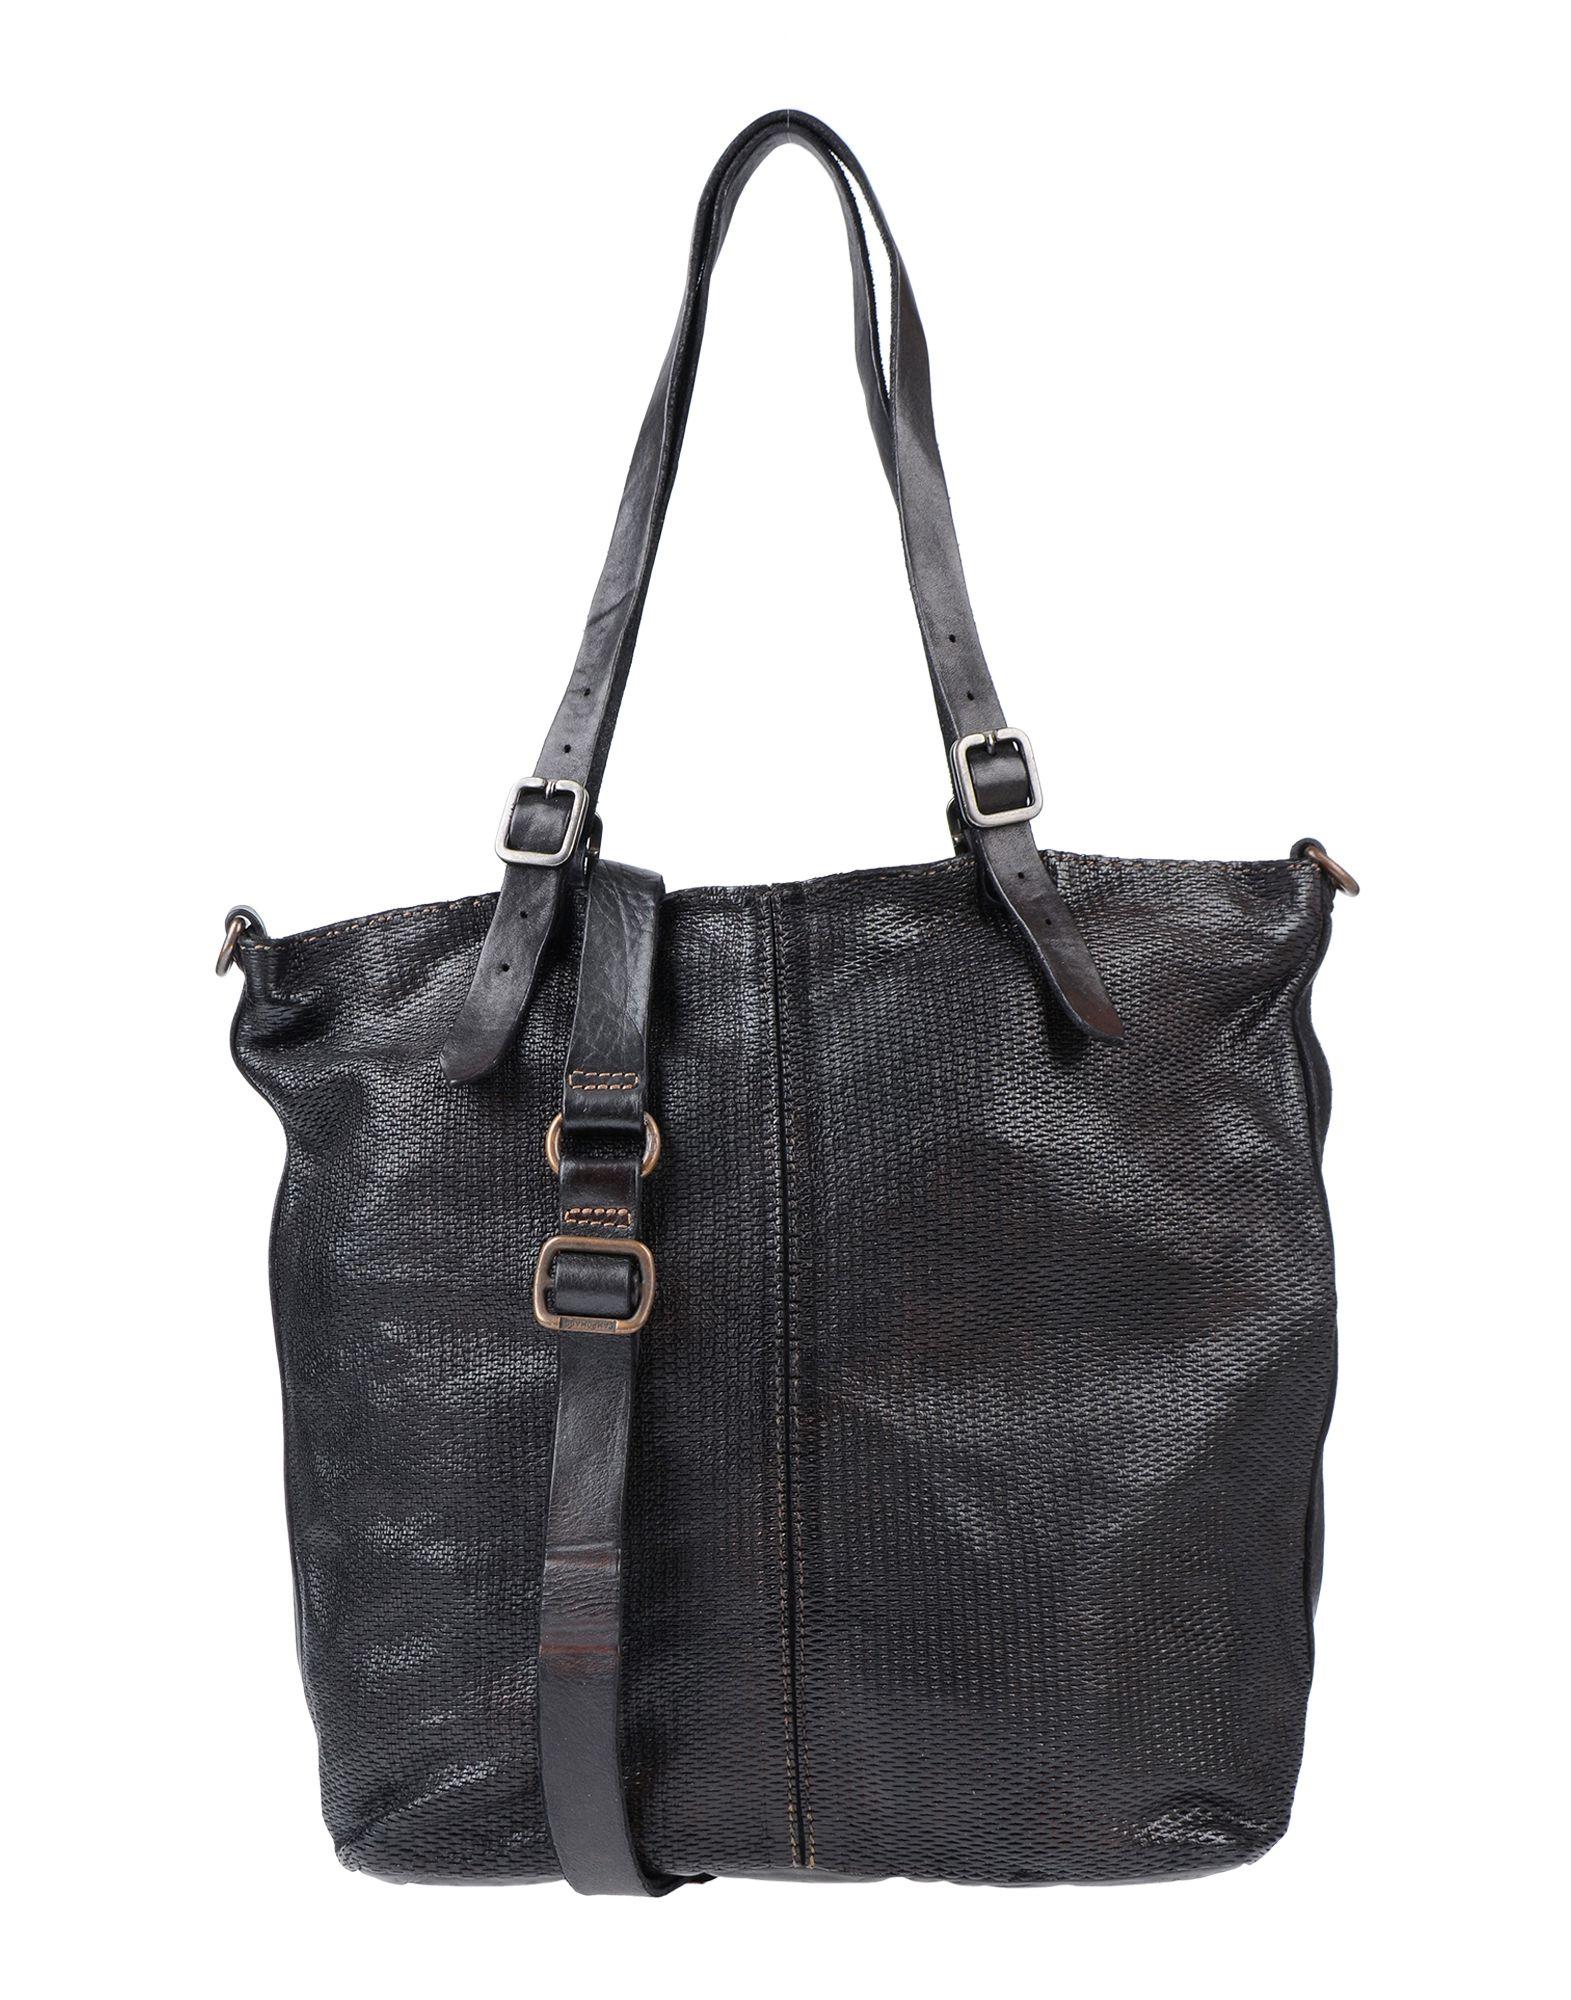 Campomaggi Handbag in Black - Lyst